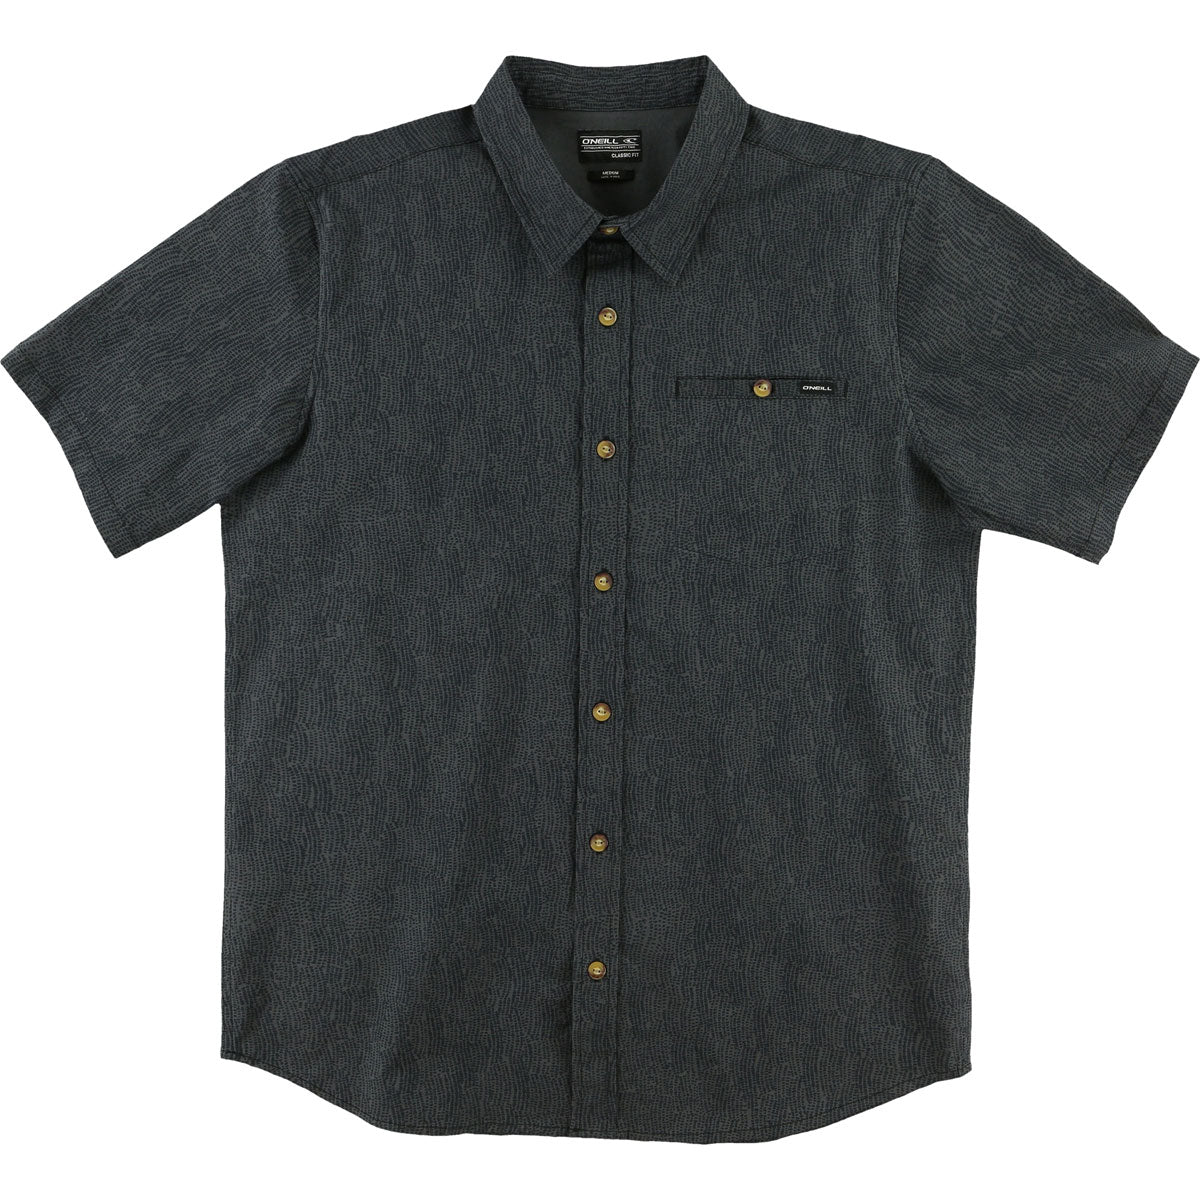 O'Neill Ellipsis Men's Button Up Short-Sleeve Shirts - Black